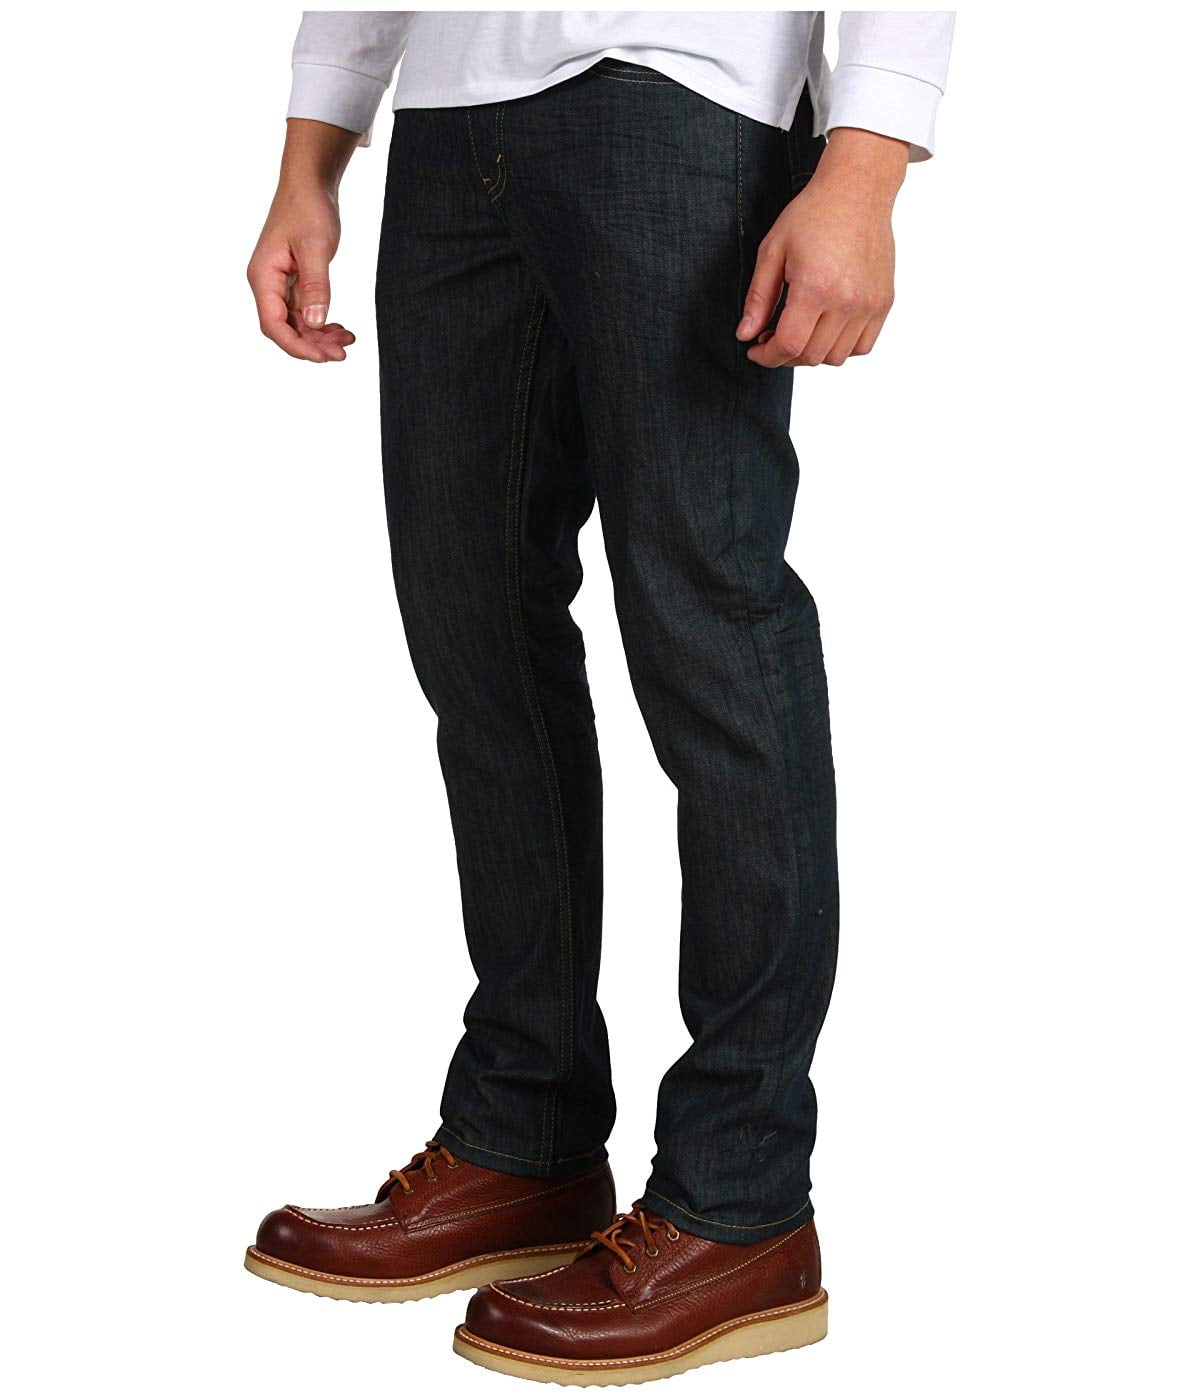 Men/'s Levi/'s 511 Slim Skinny Fit Denim Jeans Tapered Leg Stretch Pants